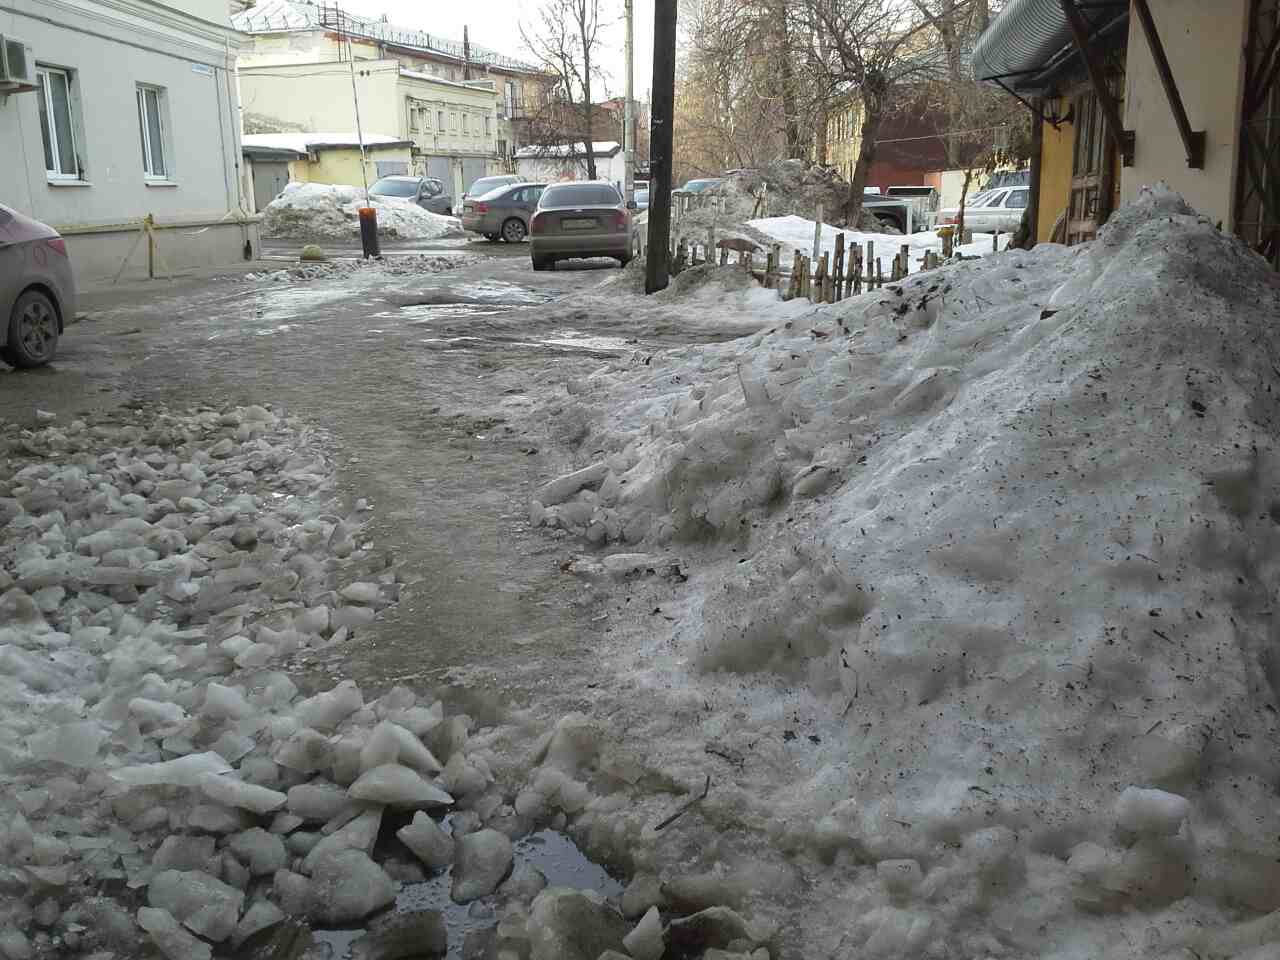 «За зиму ни разу не убирались!» Двор в центре Нижнего
Новгорода погребен под снегом